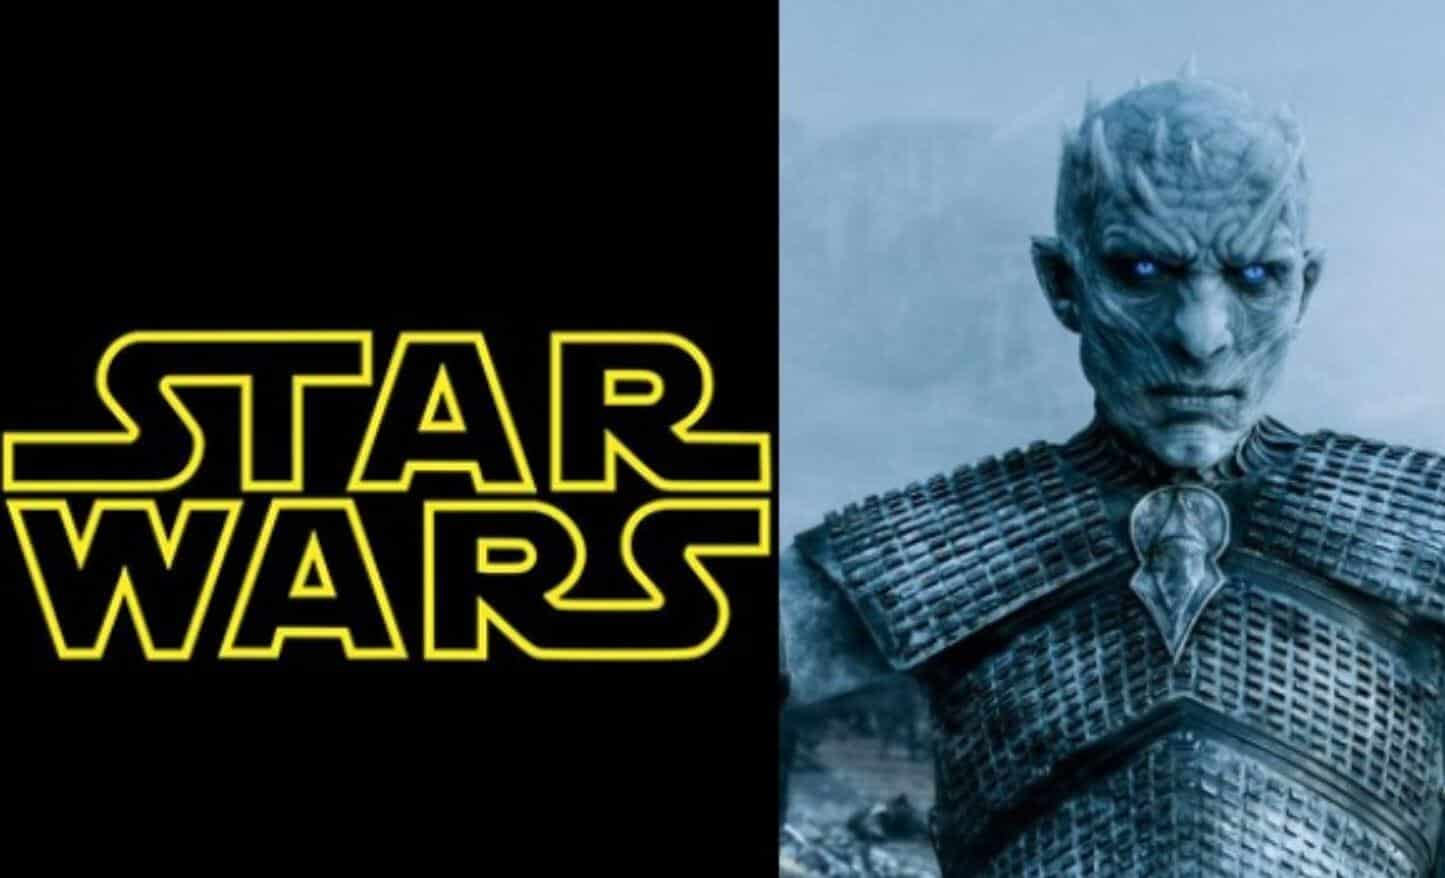 Rian Johnson Star Wars Trilogy CANCELLED! 